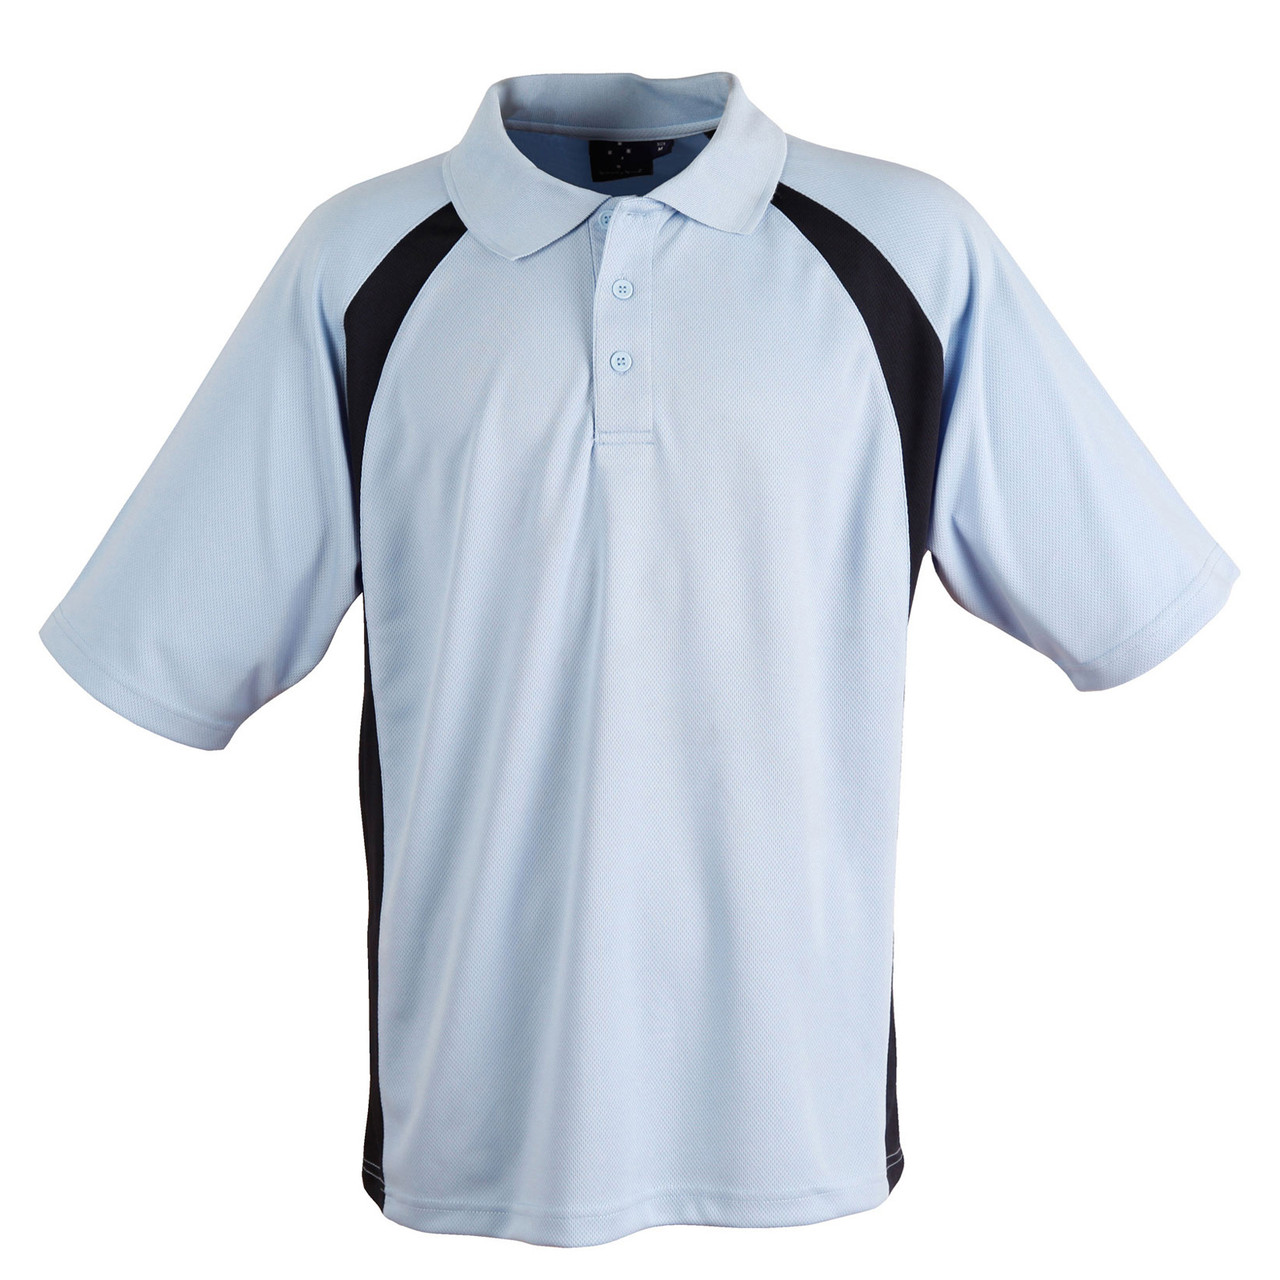 Mens CoolDry Micro-Mesh Contrast Polo Shirt | Shop Team Active Sportswear